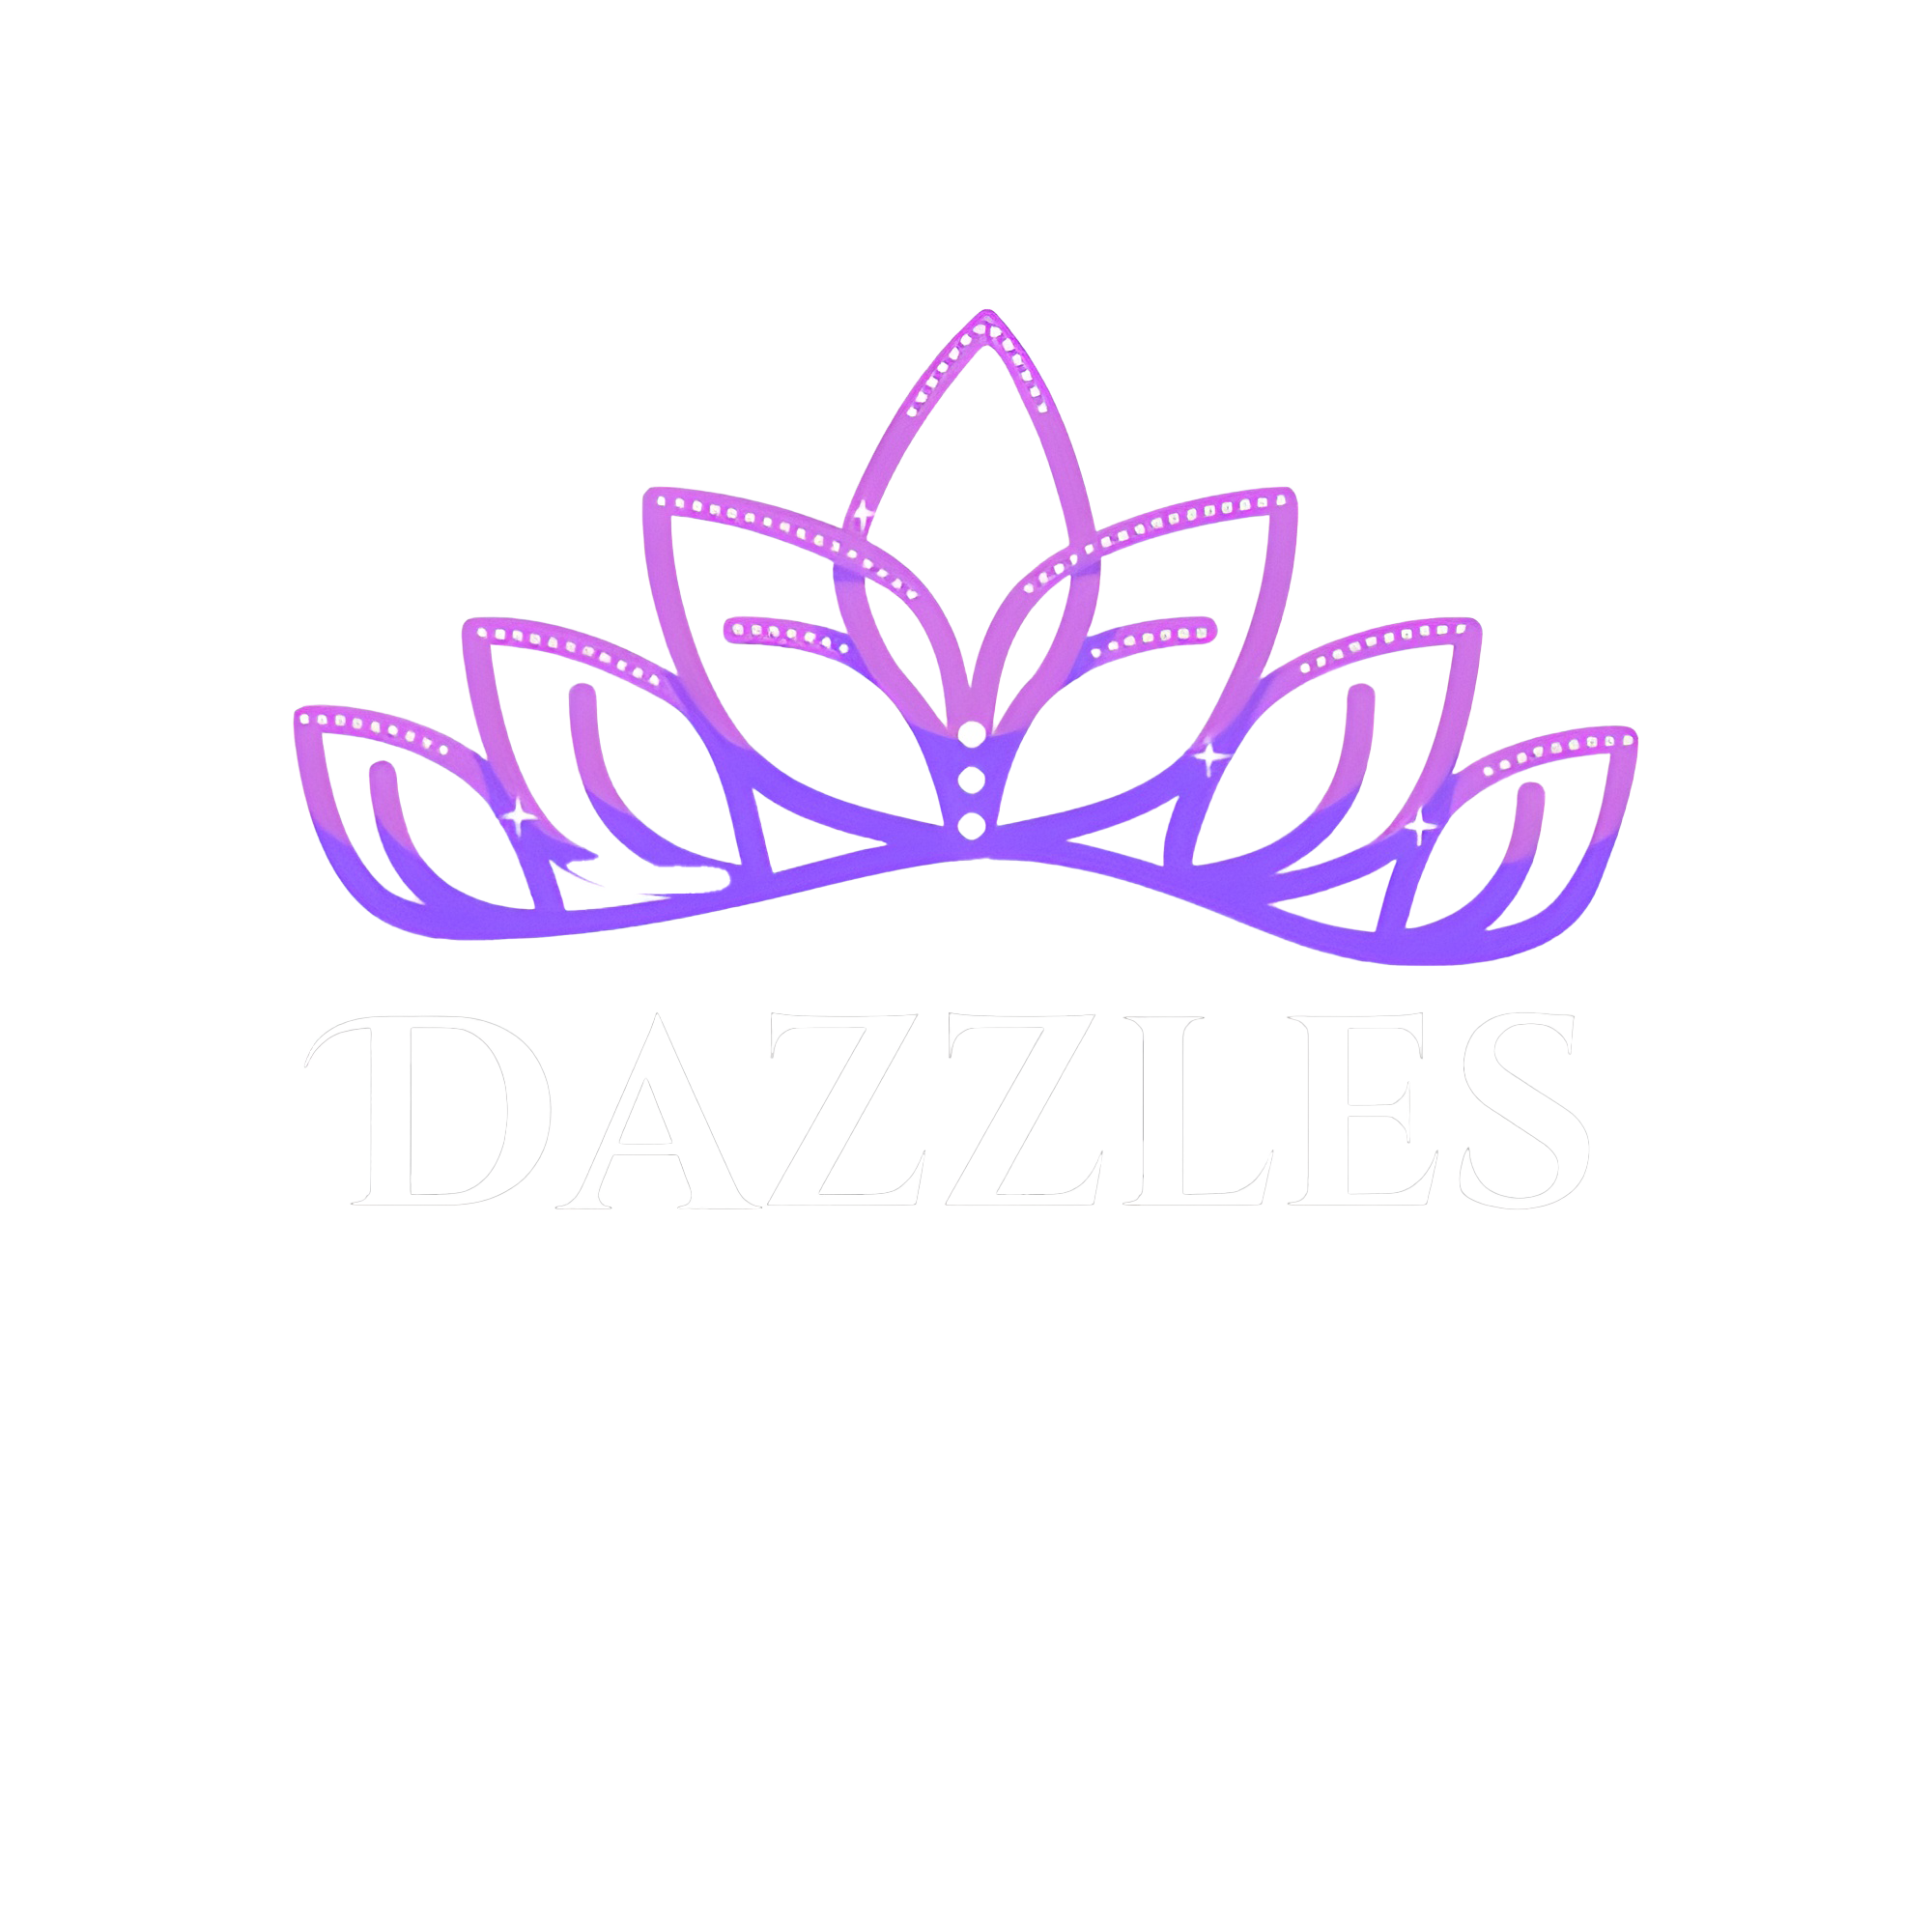 Dazzles Princess Parties logo